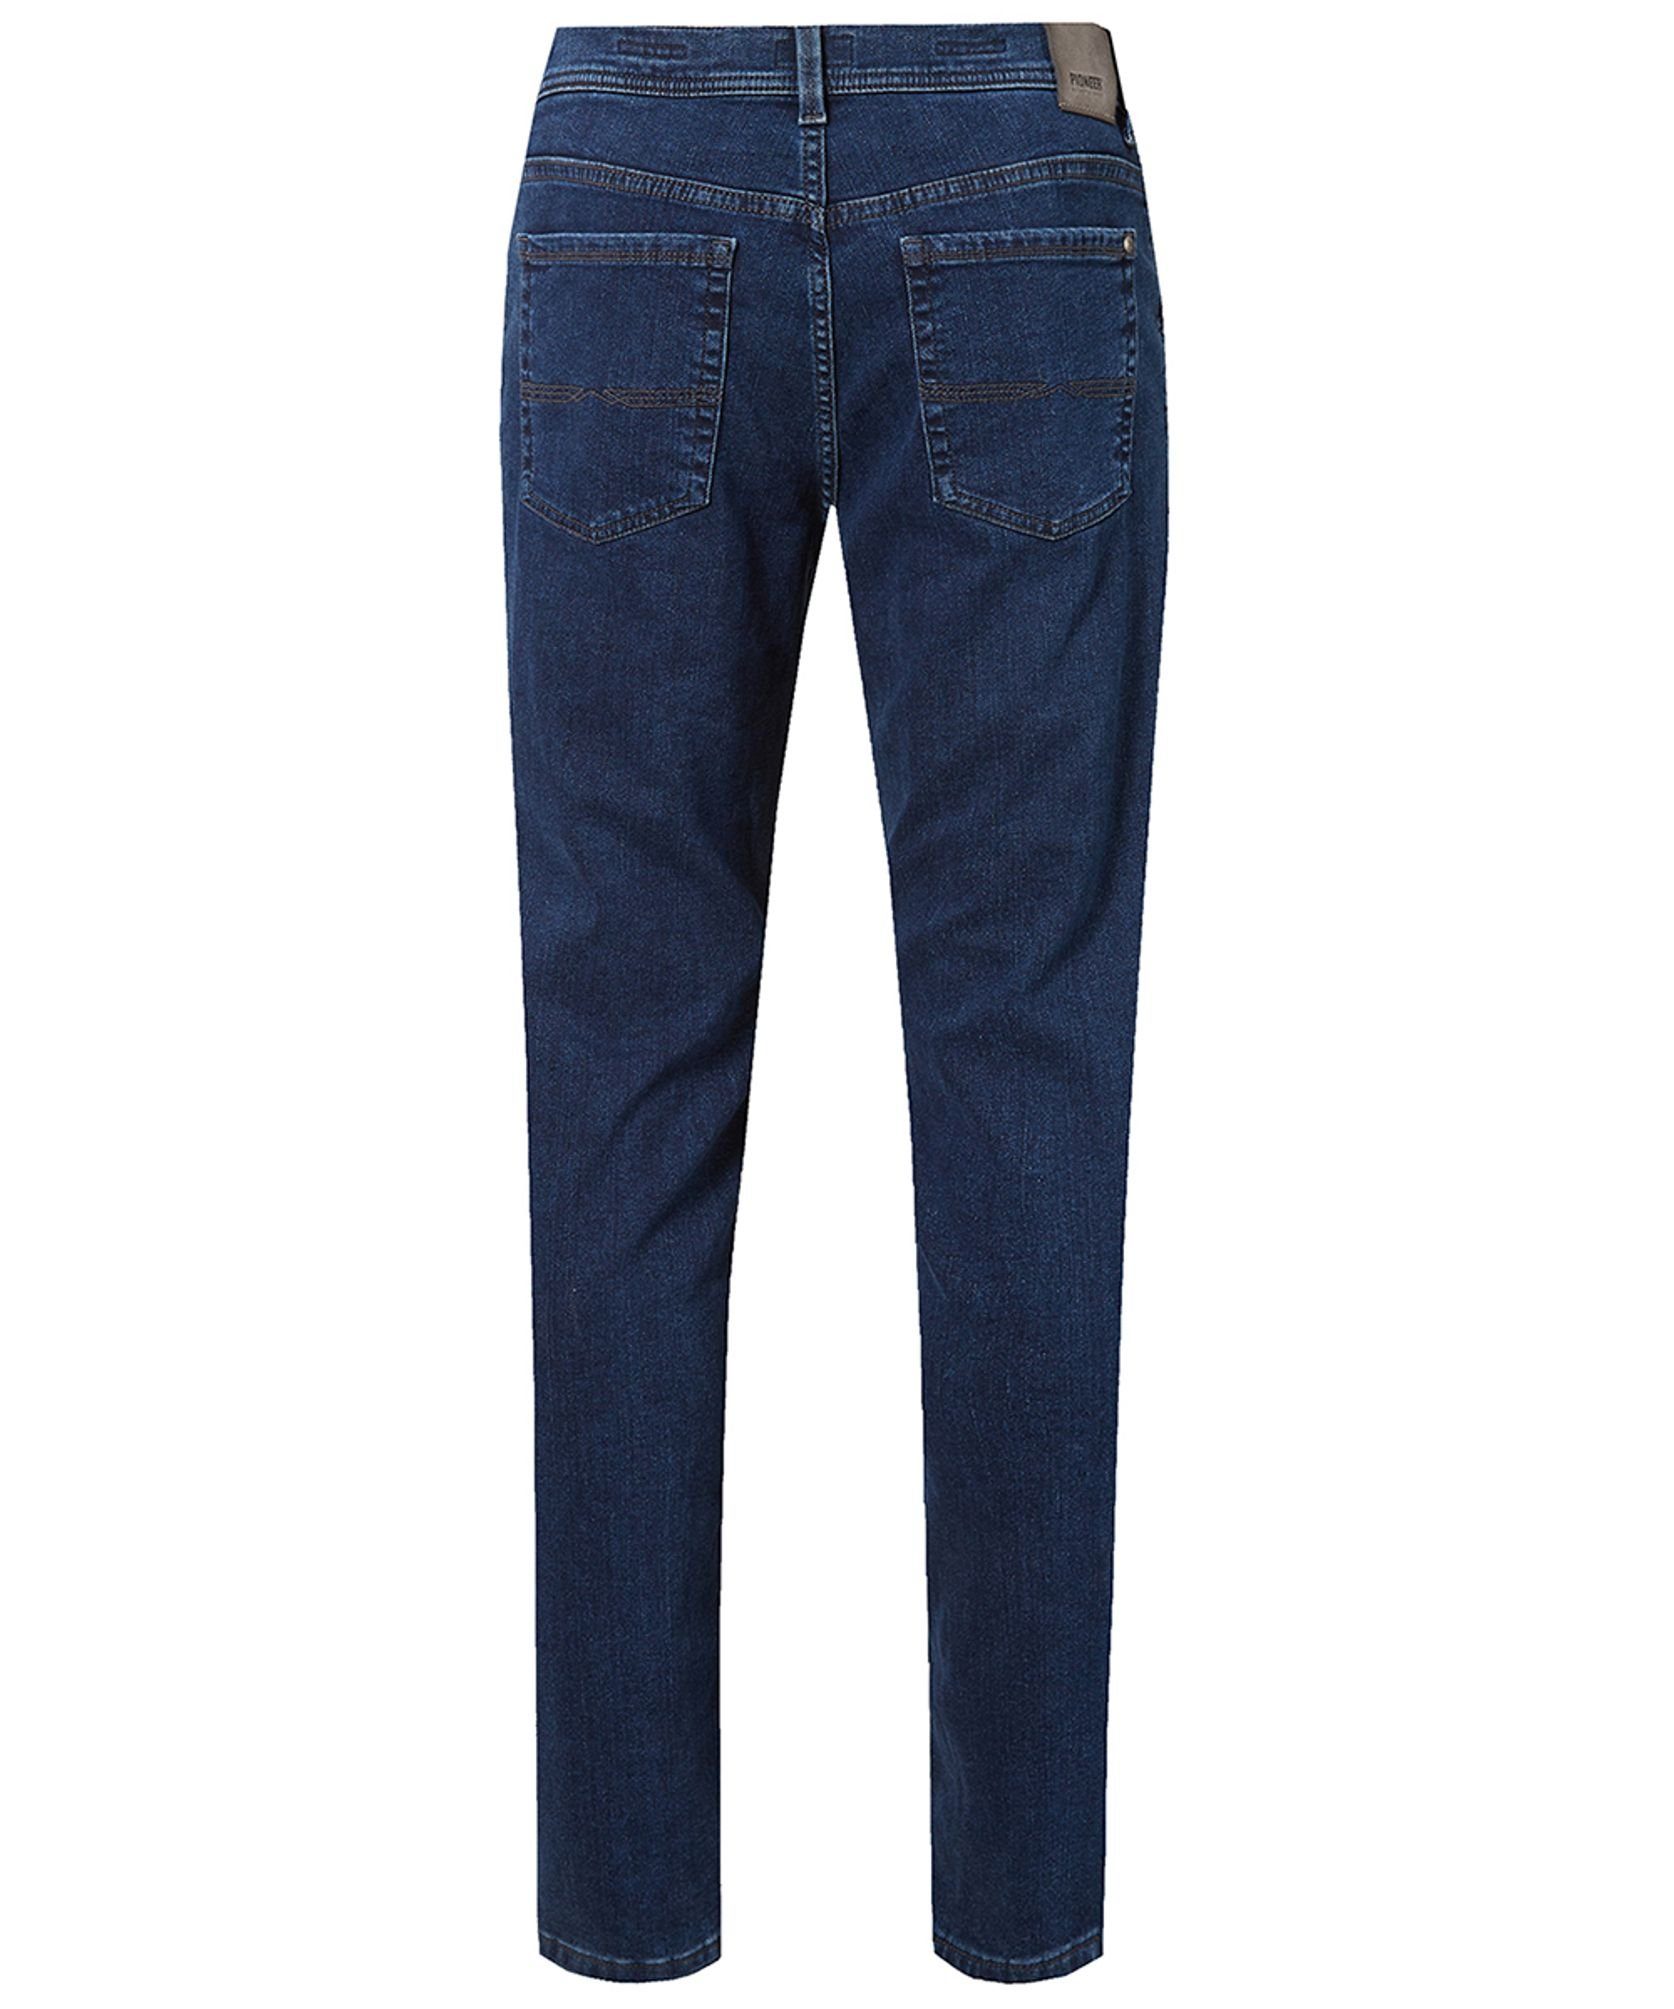 Pioneer Authentic Jeans 5-Pocket-Jeans P0 blue 16801.06624 Stretch stonewash dark